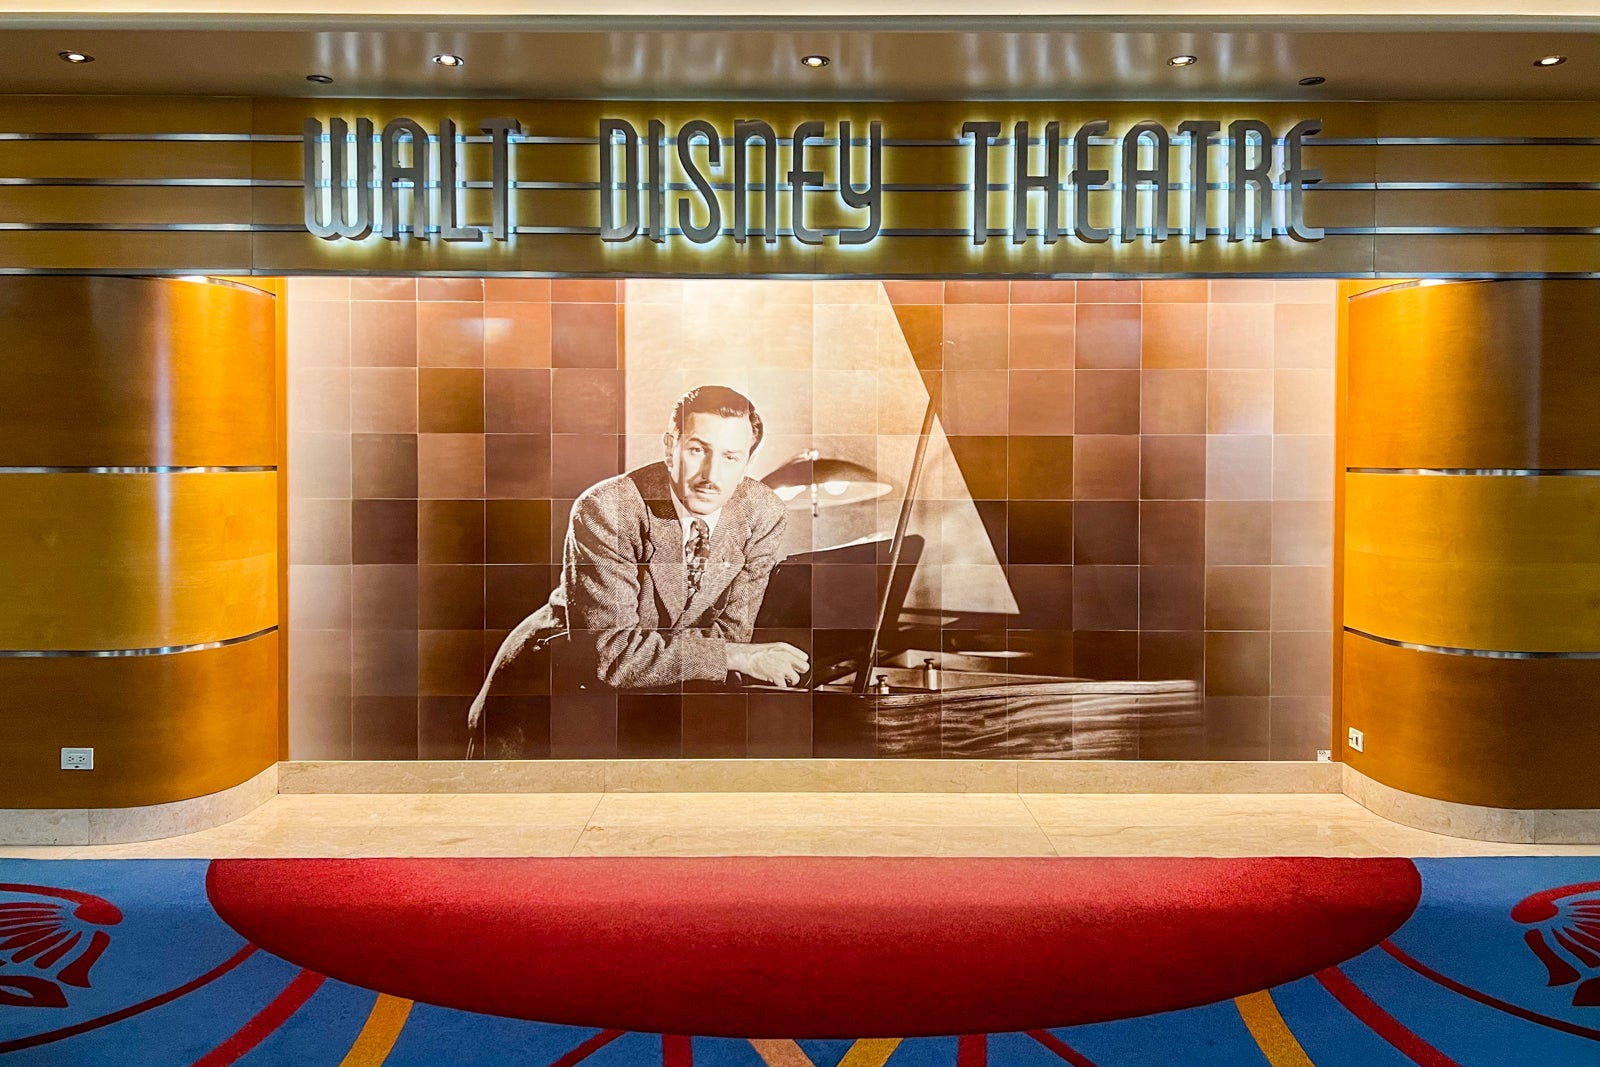 Walt Disney Theatre on Disney Wonder.